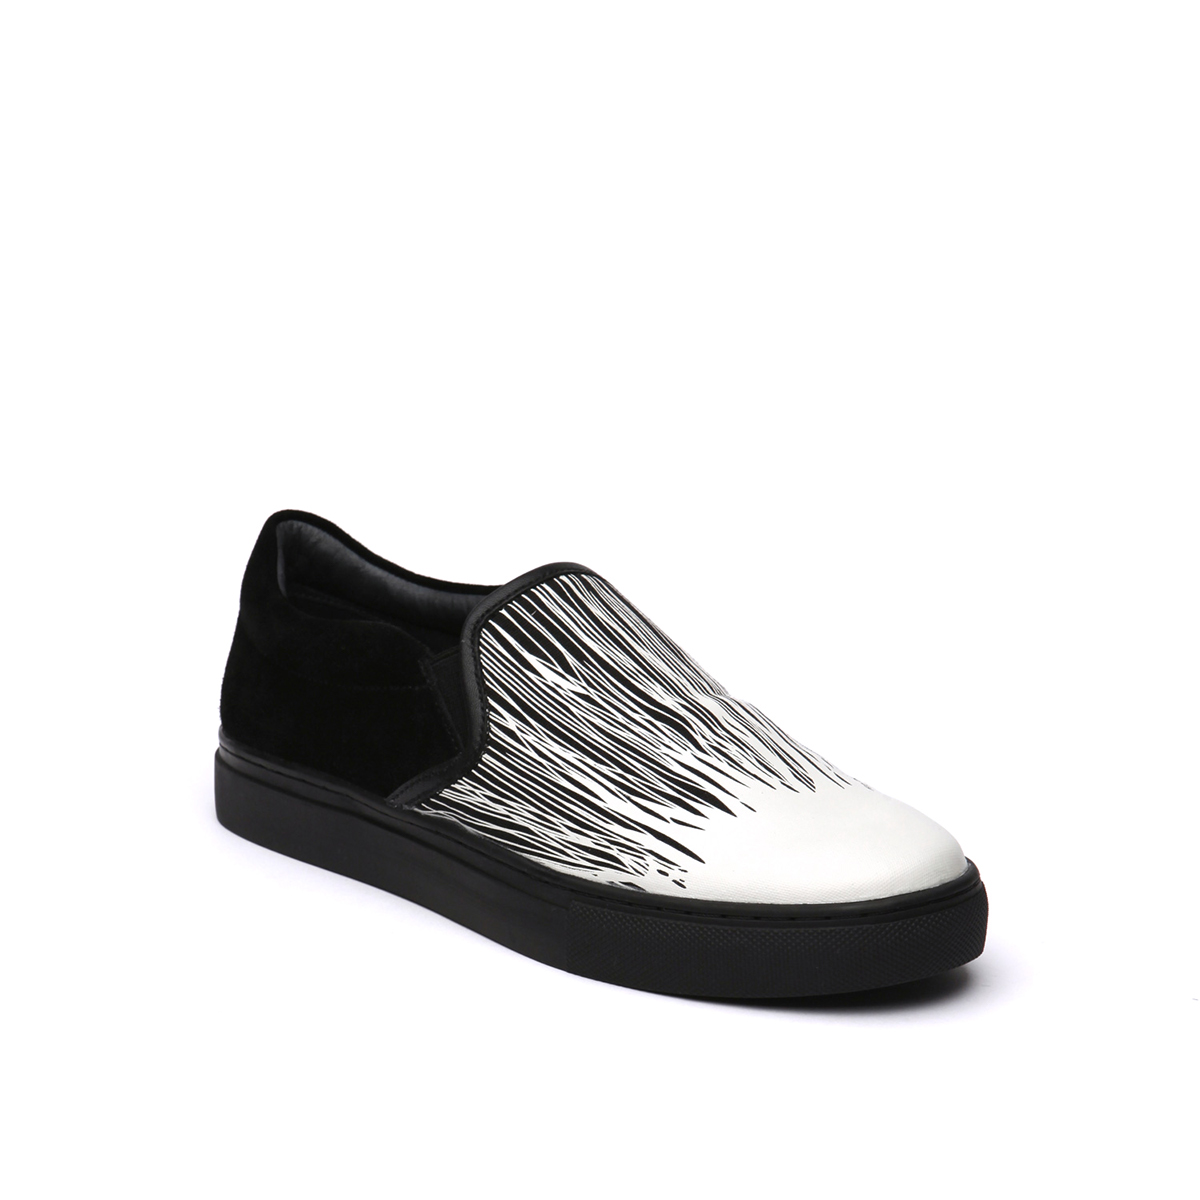 graphic shoes leather black White line splash cool